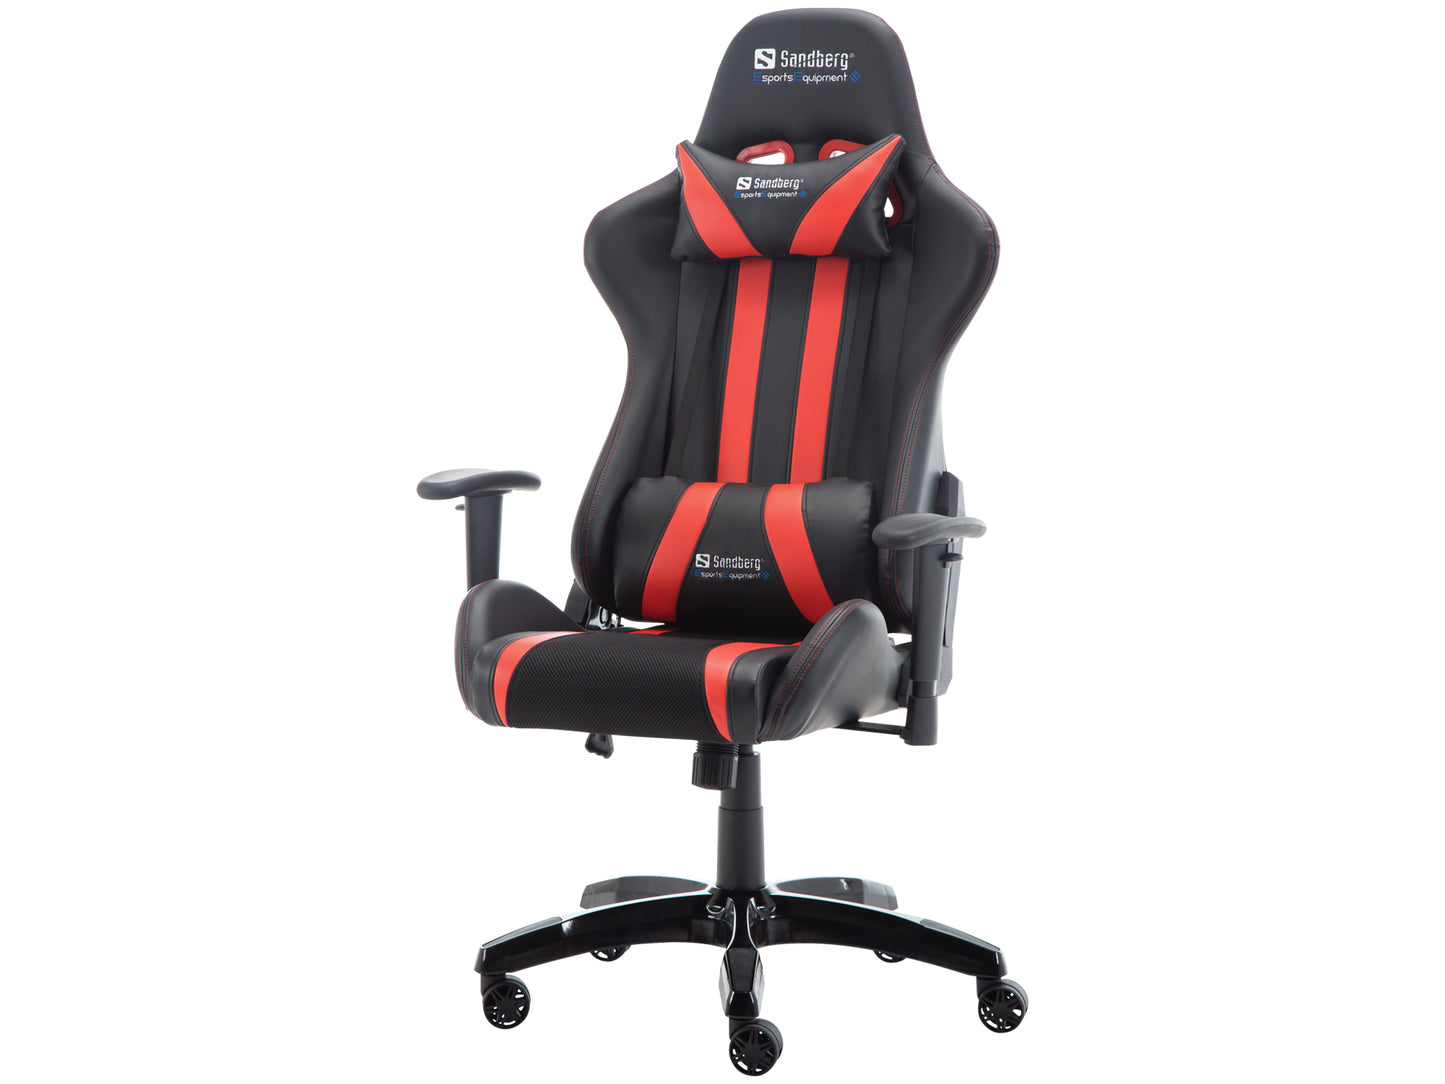 Sandberg 640-81 Commander Gaming Chair Blk/Red 